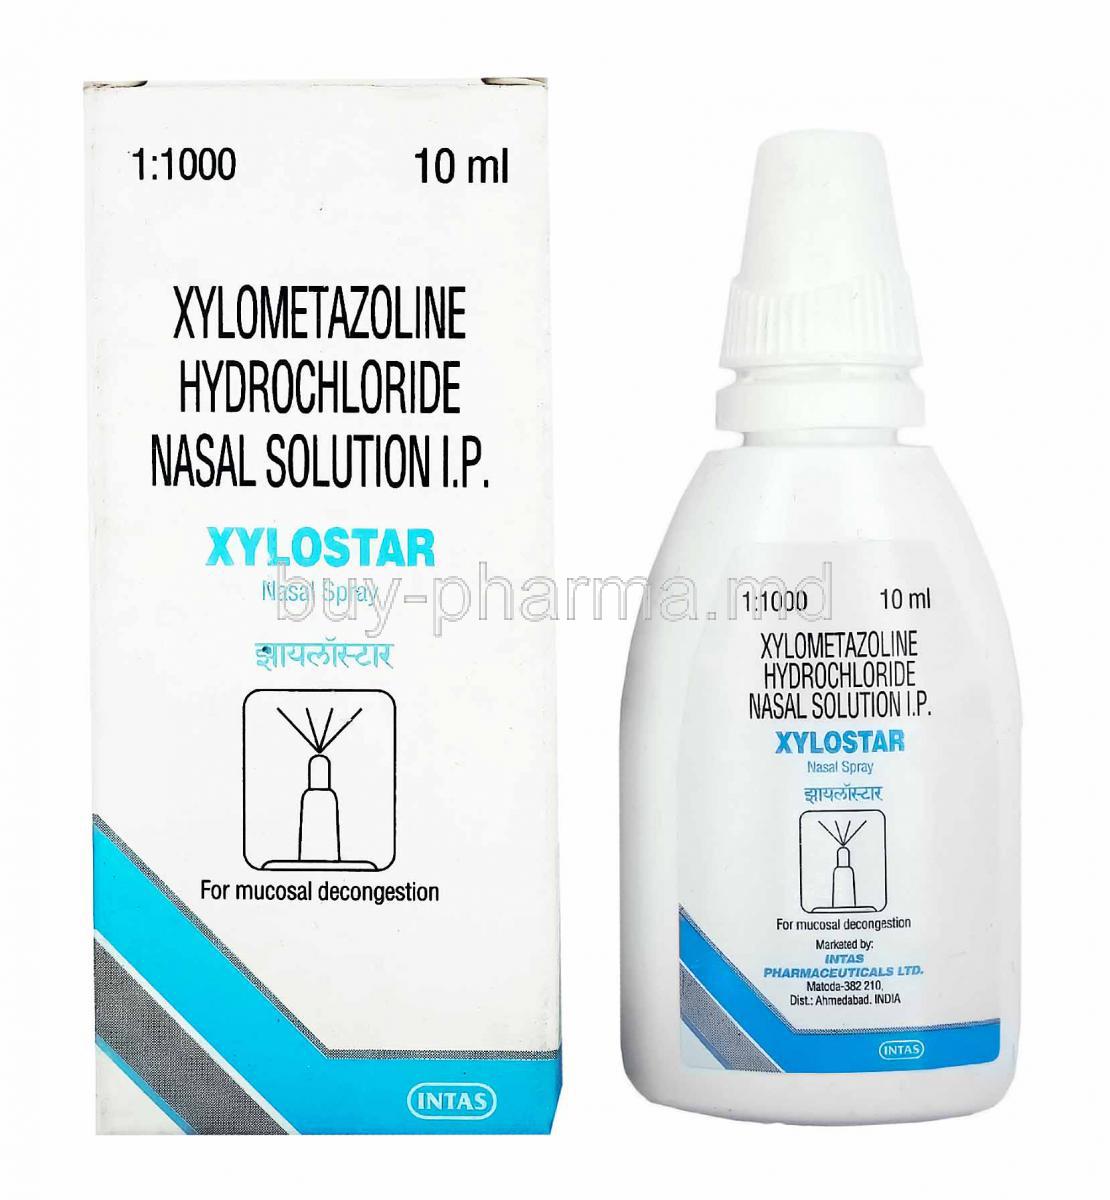 Xylostar Nasal Solution, Xylometazoline Hydrochioride